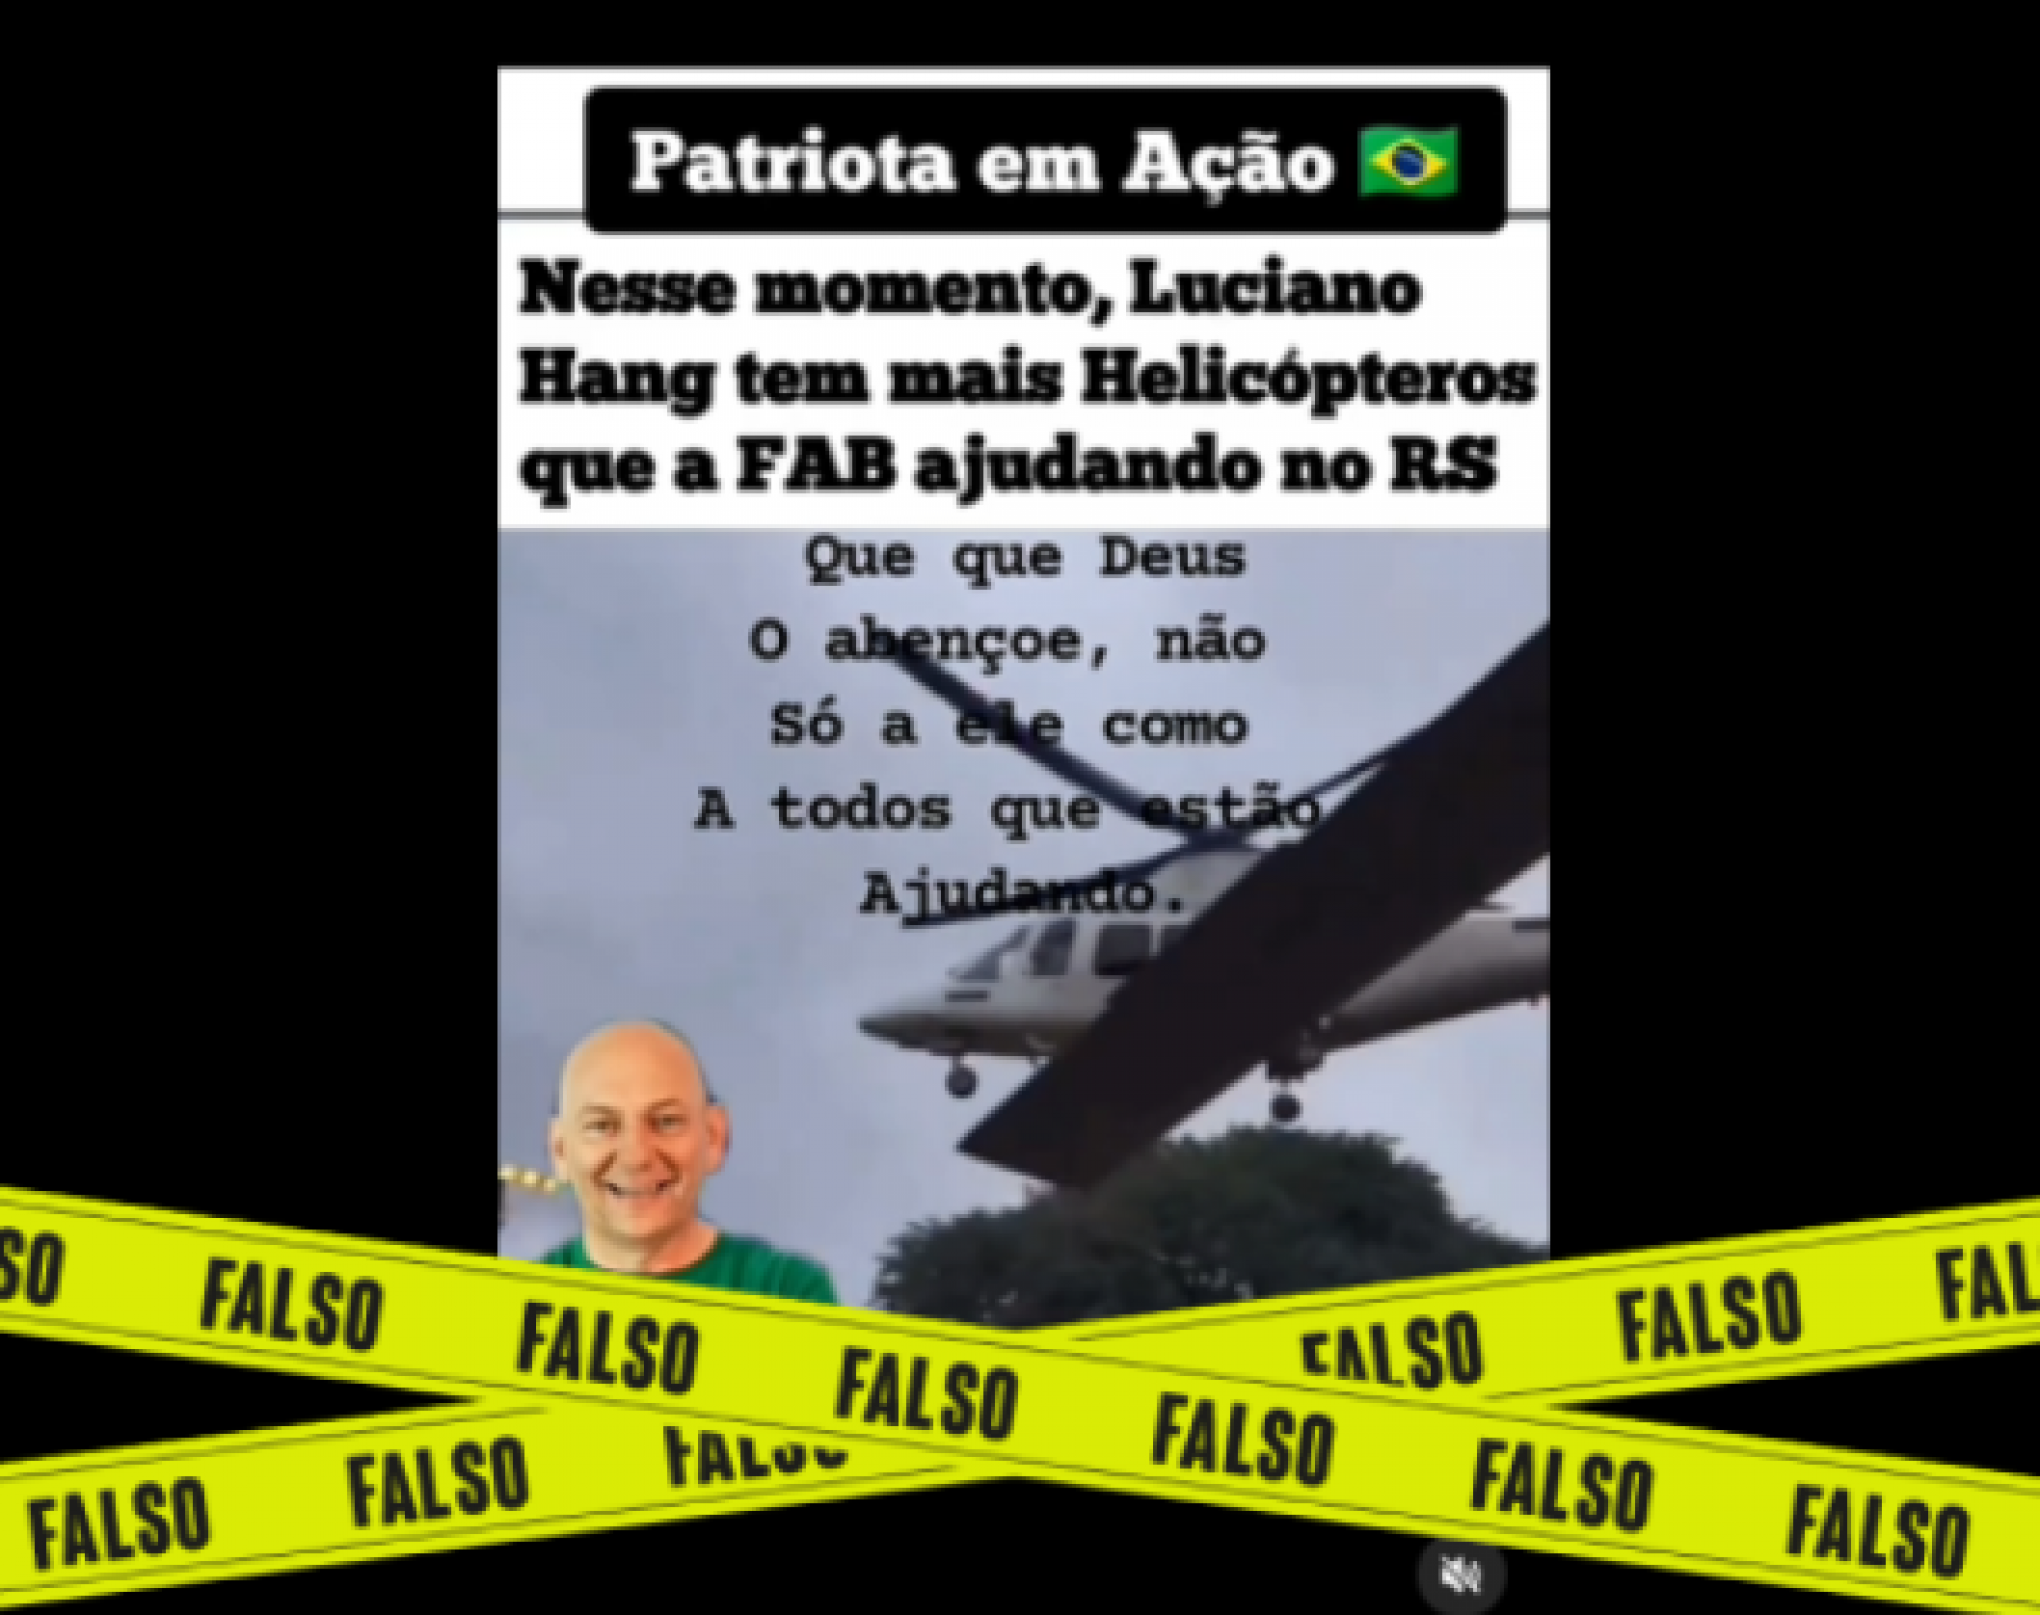 AGÊNCIA LUPA: É falso que Luciano Hang enviou mais helicópteros ao RS que a Força Aérea Brasileira